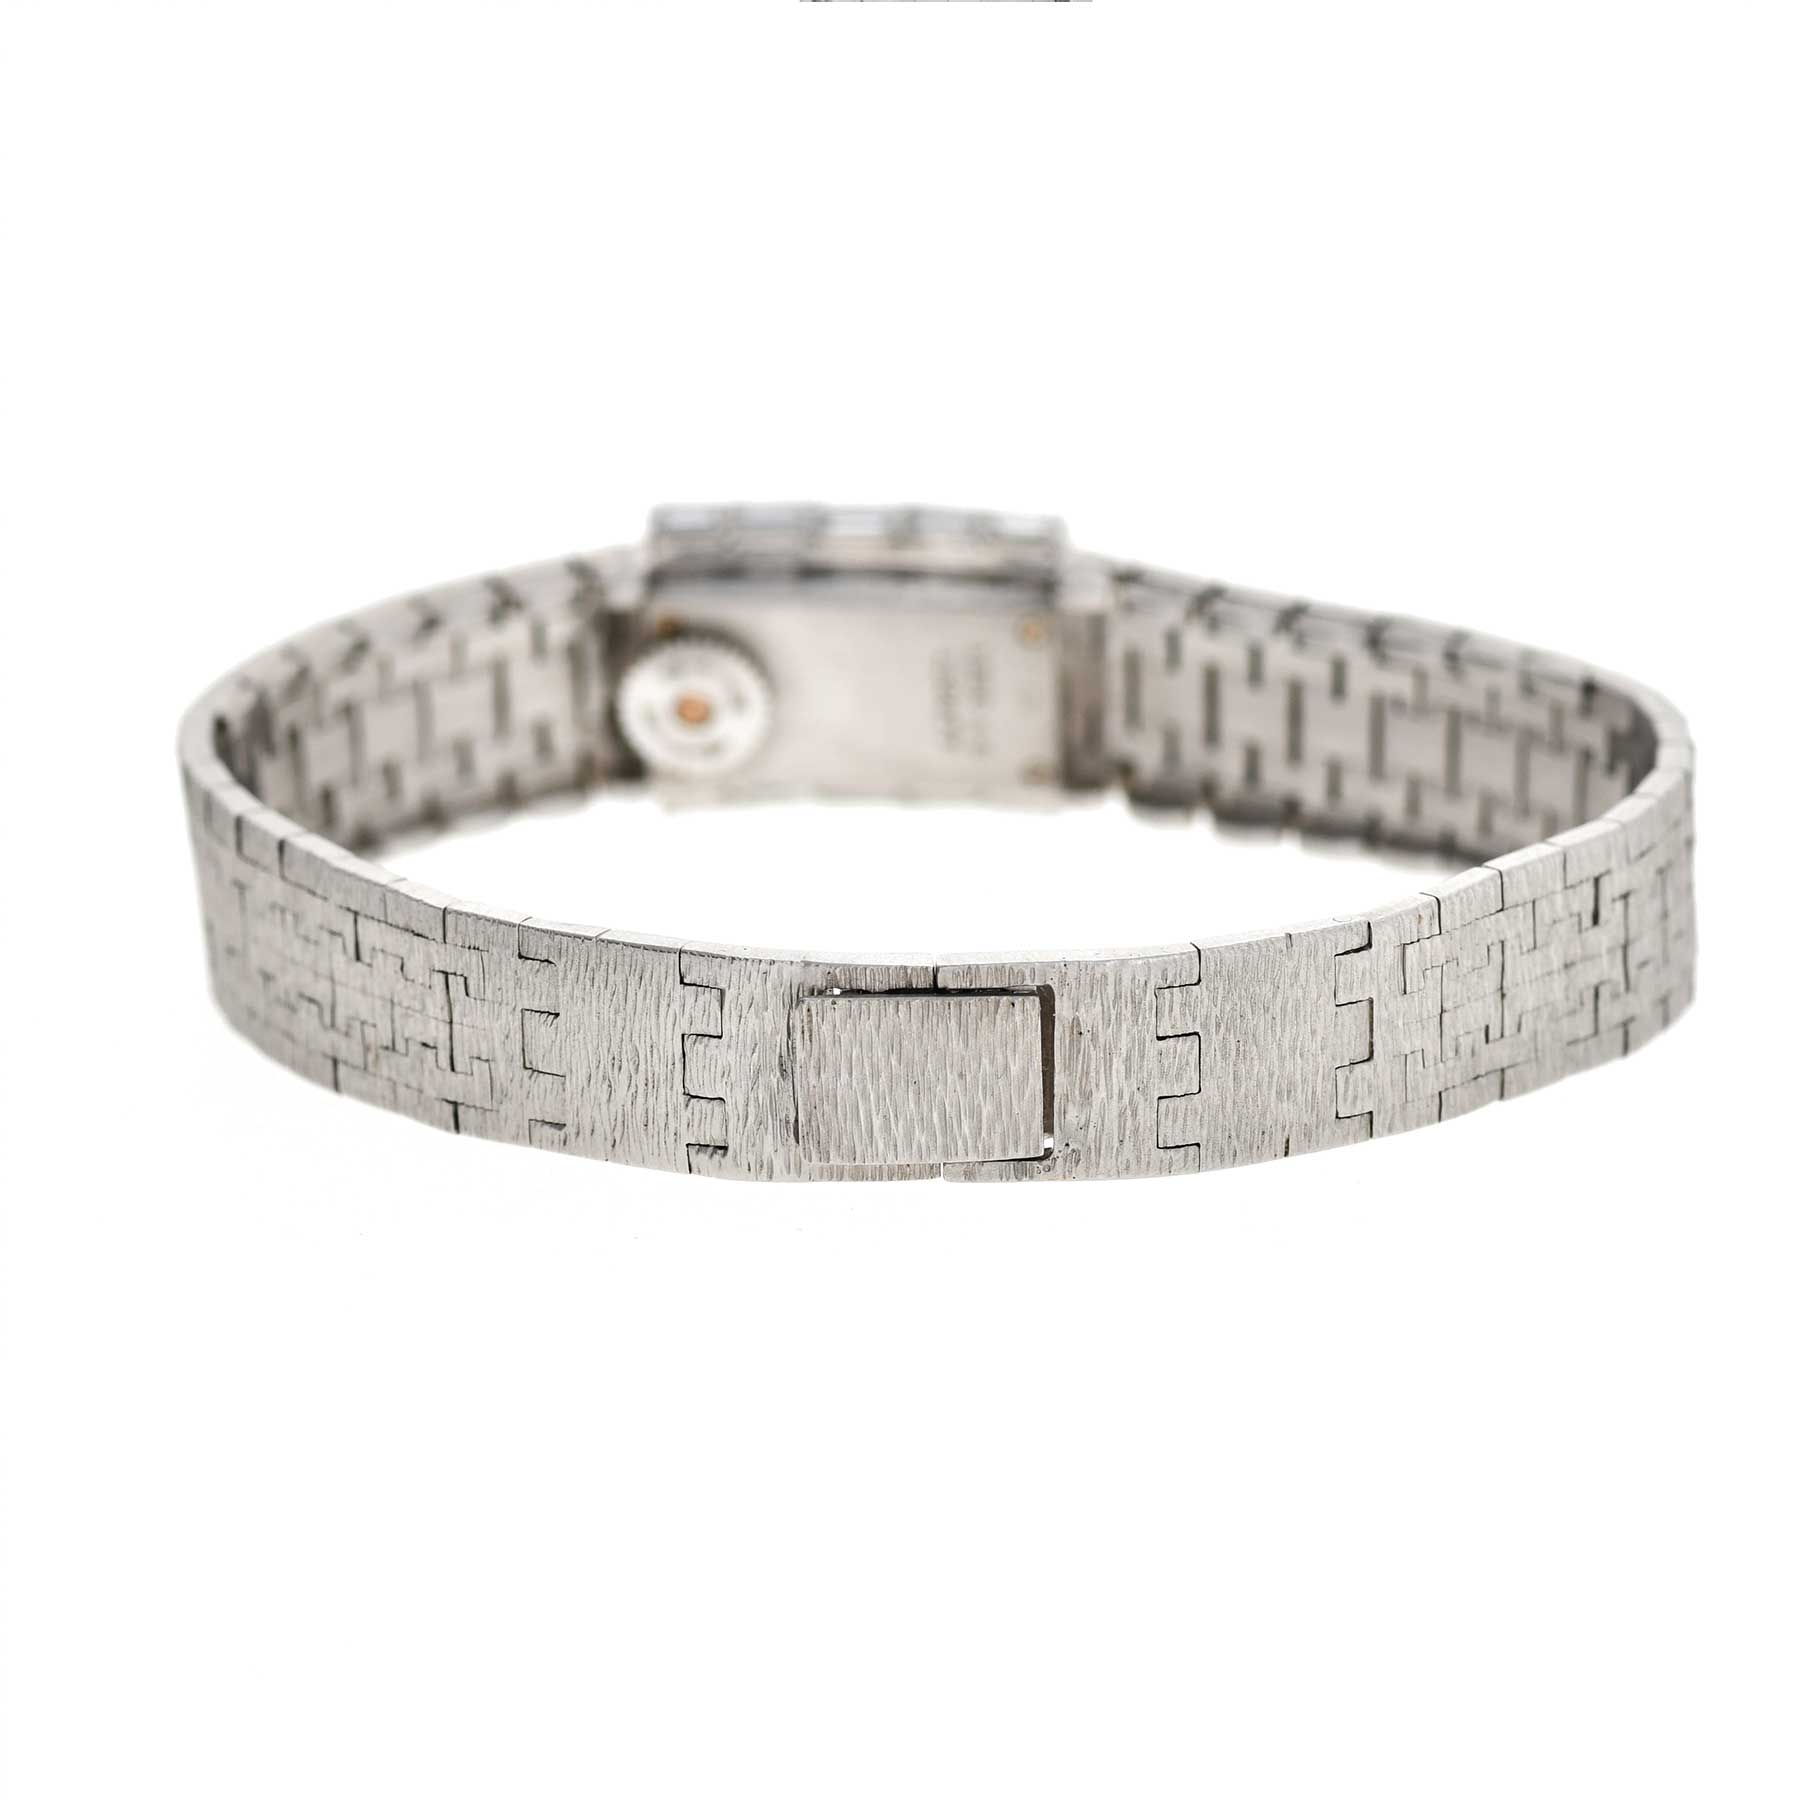 piaget-ref1220A6-baguette-diamond-bracelet-watch-img-main5